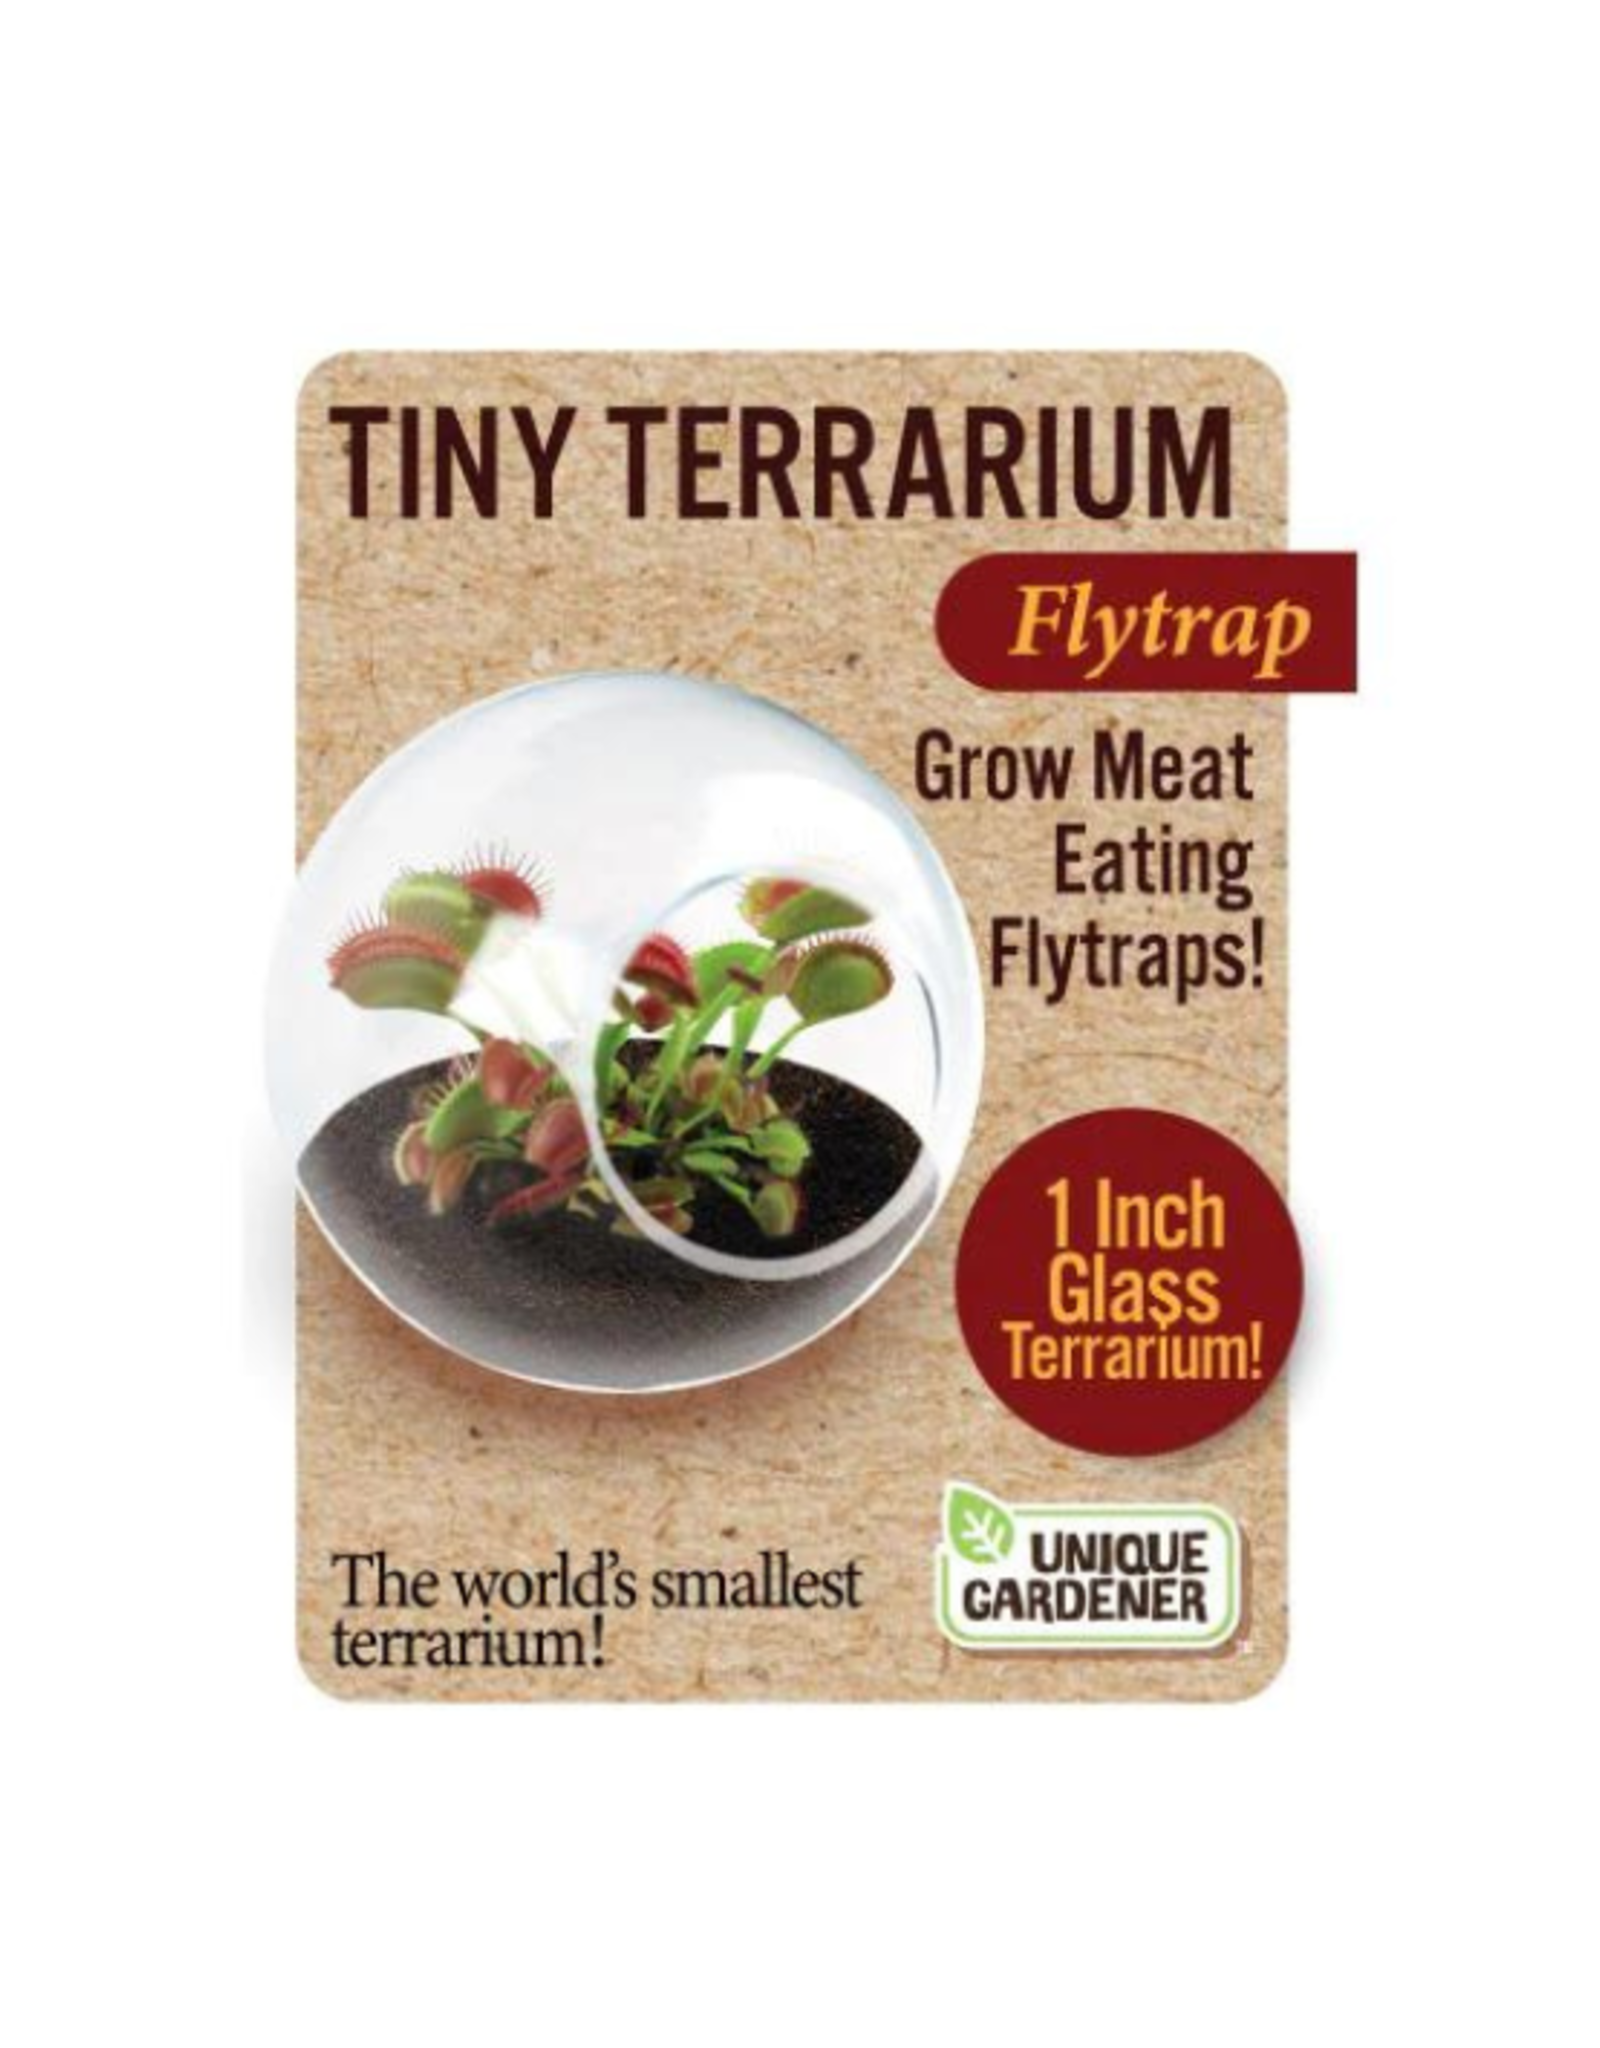 Tiny Terrariums - Fly Trap